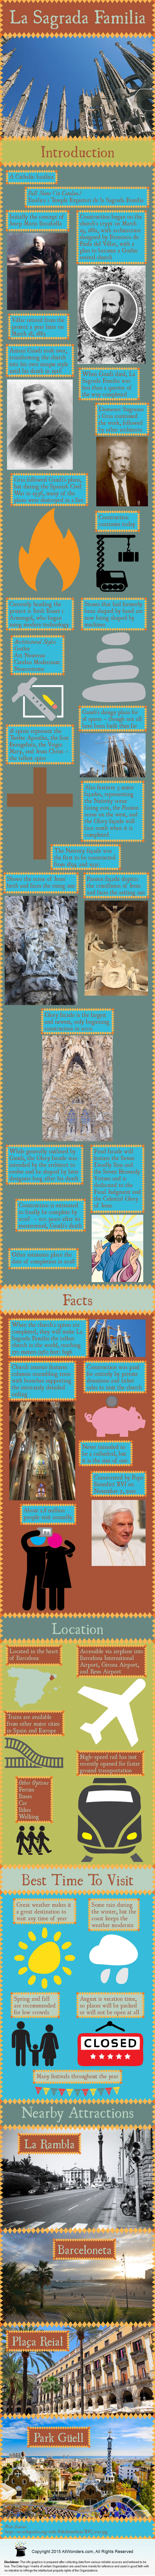 Infographic of La Sagrada Familia, Spain